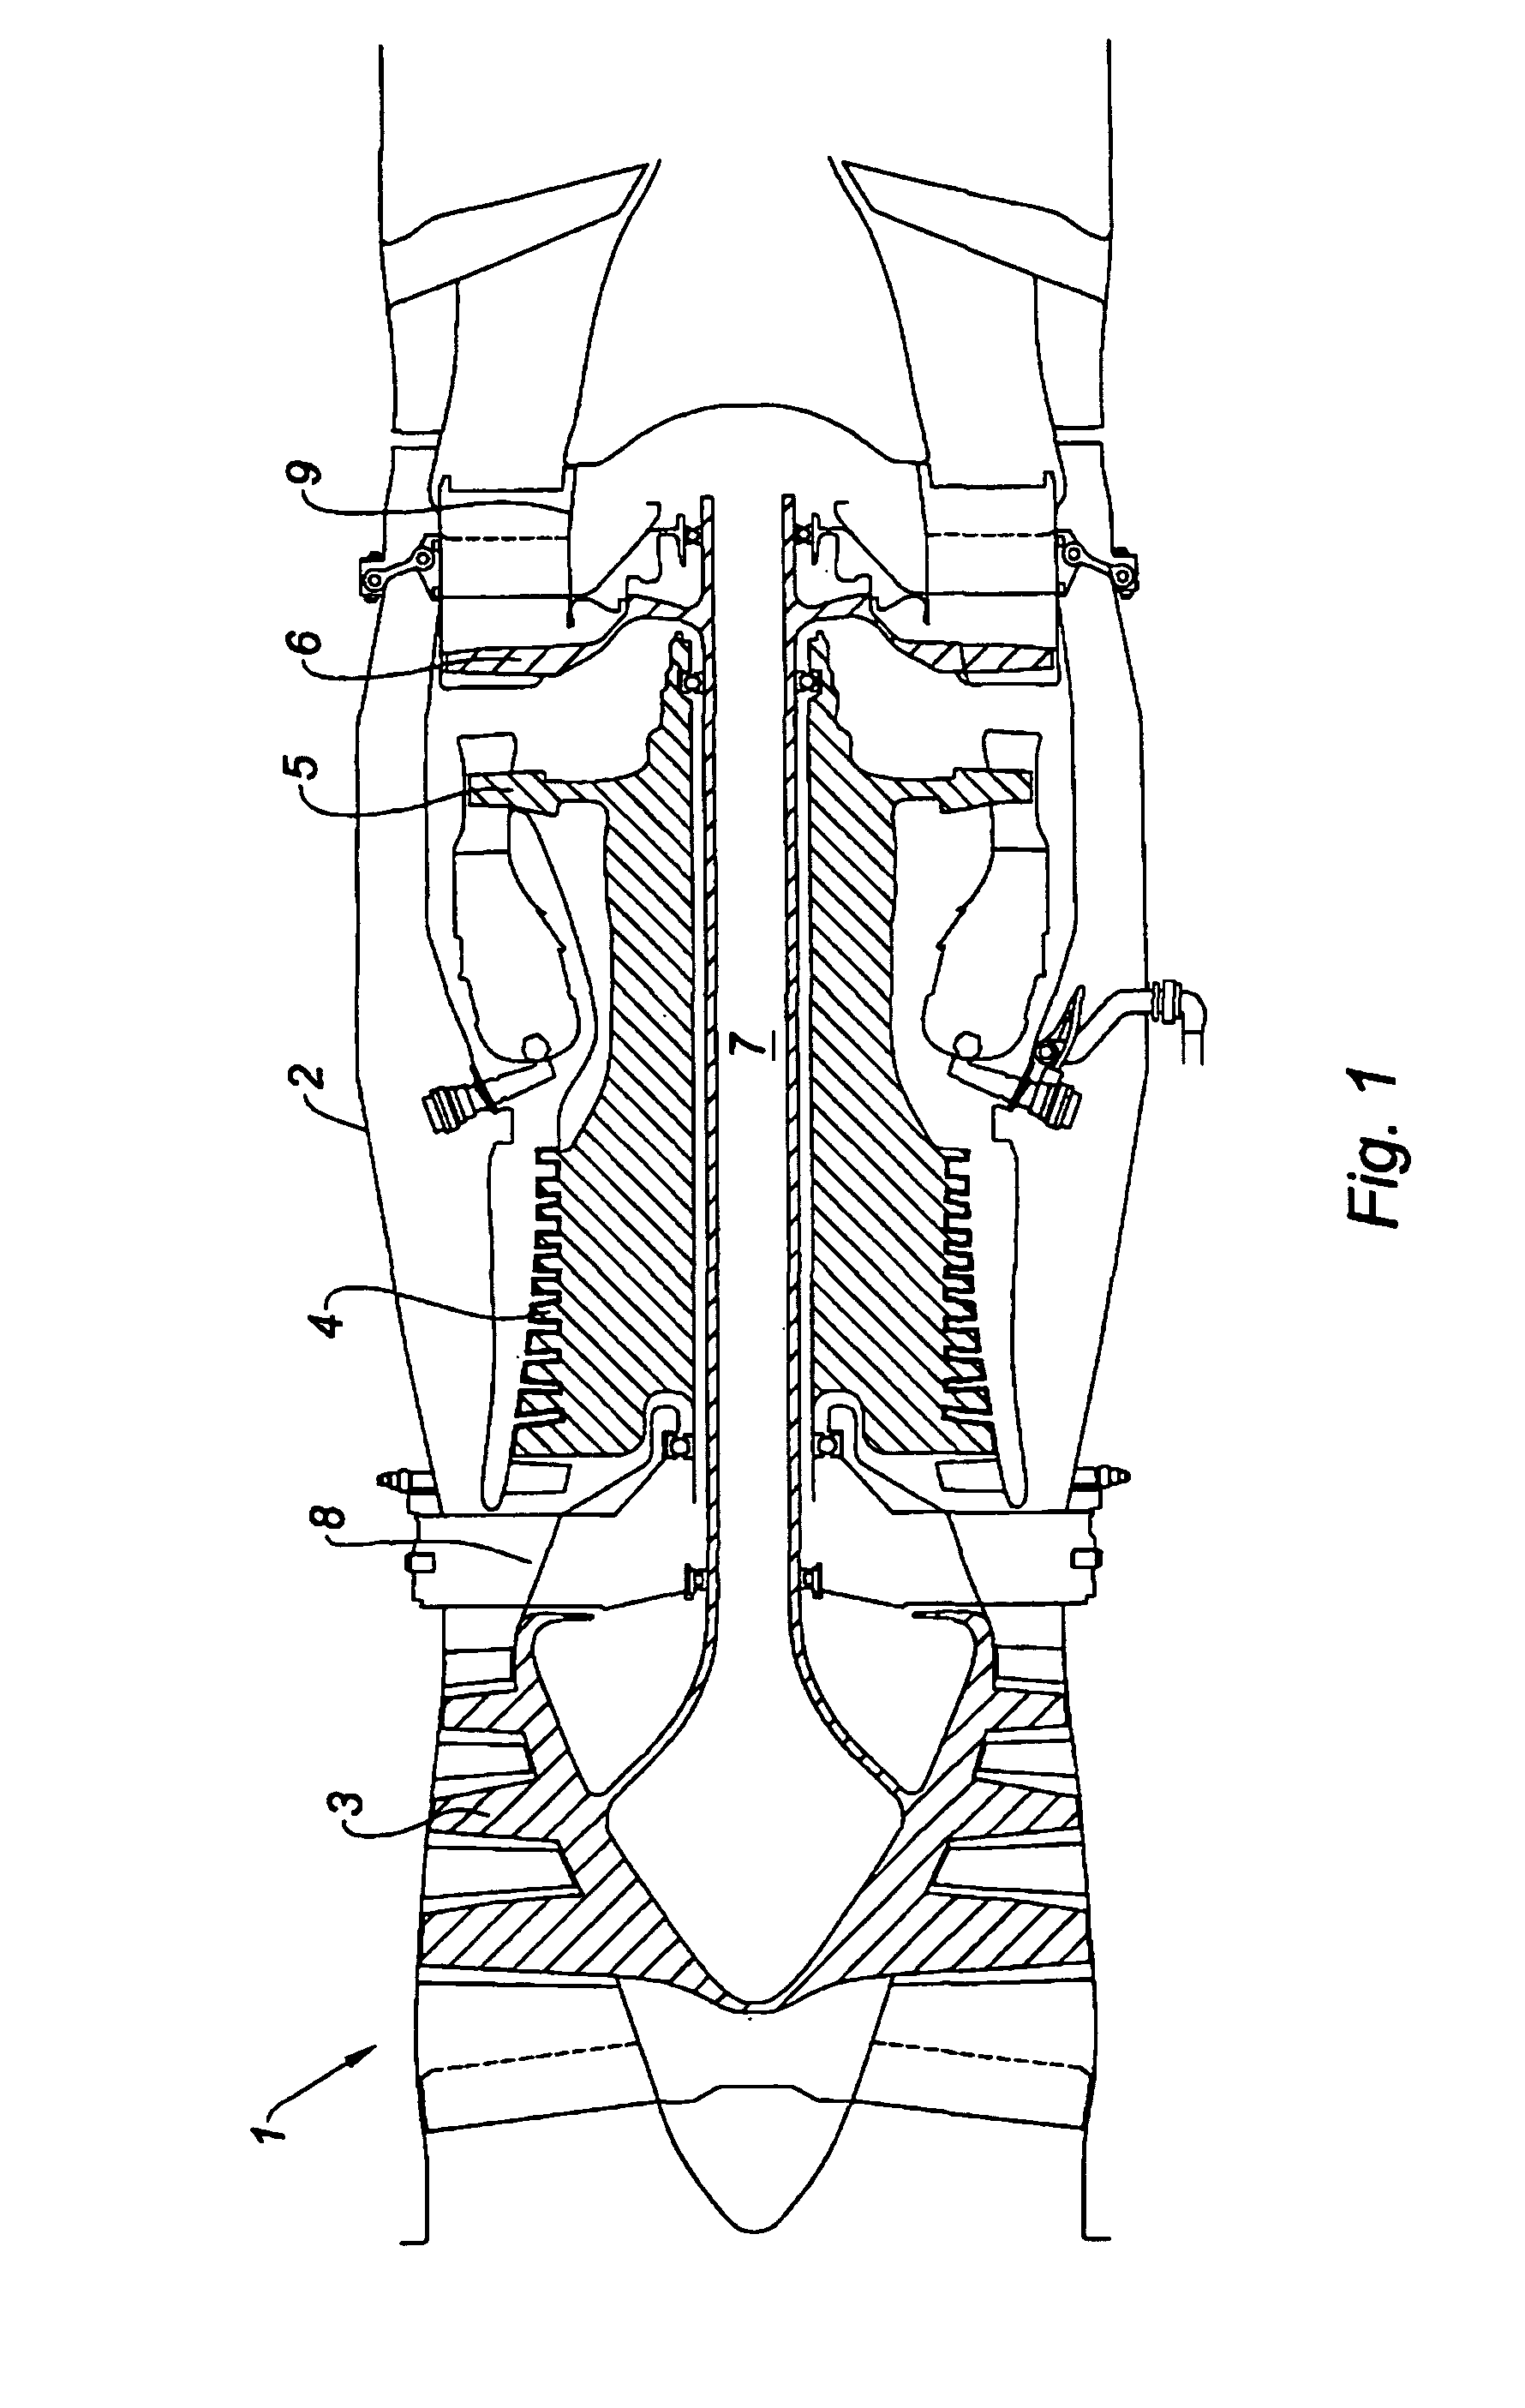 Structural turbine engine casing